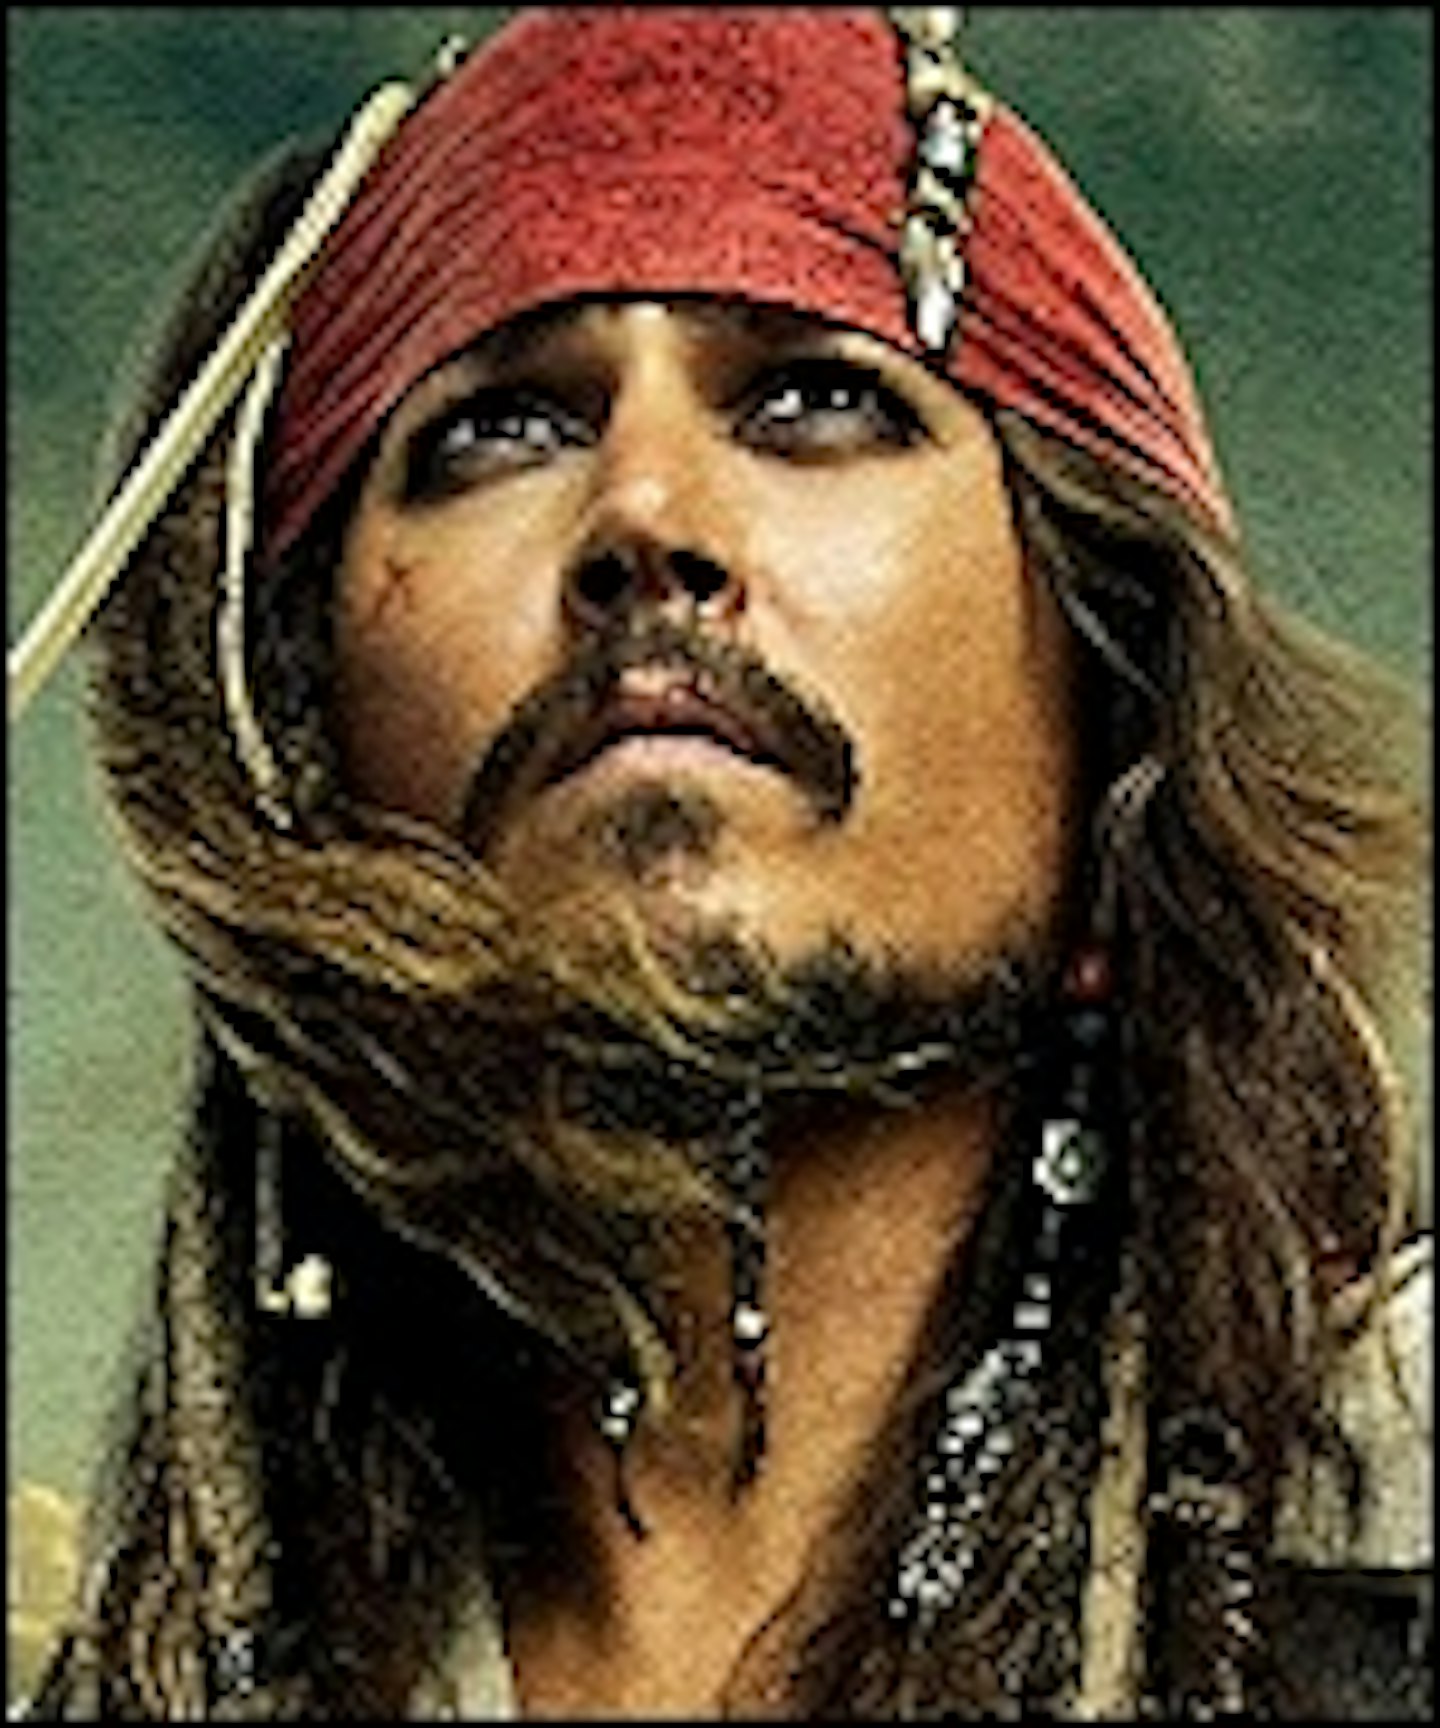 New Pirates 4 Trailer Explodes Online